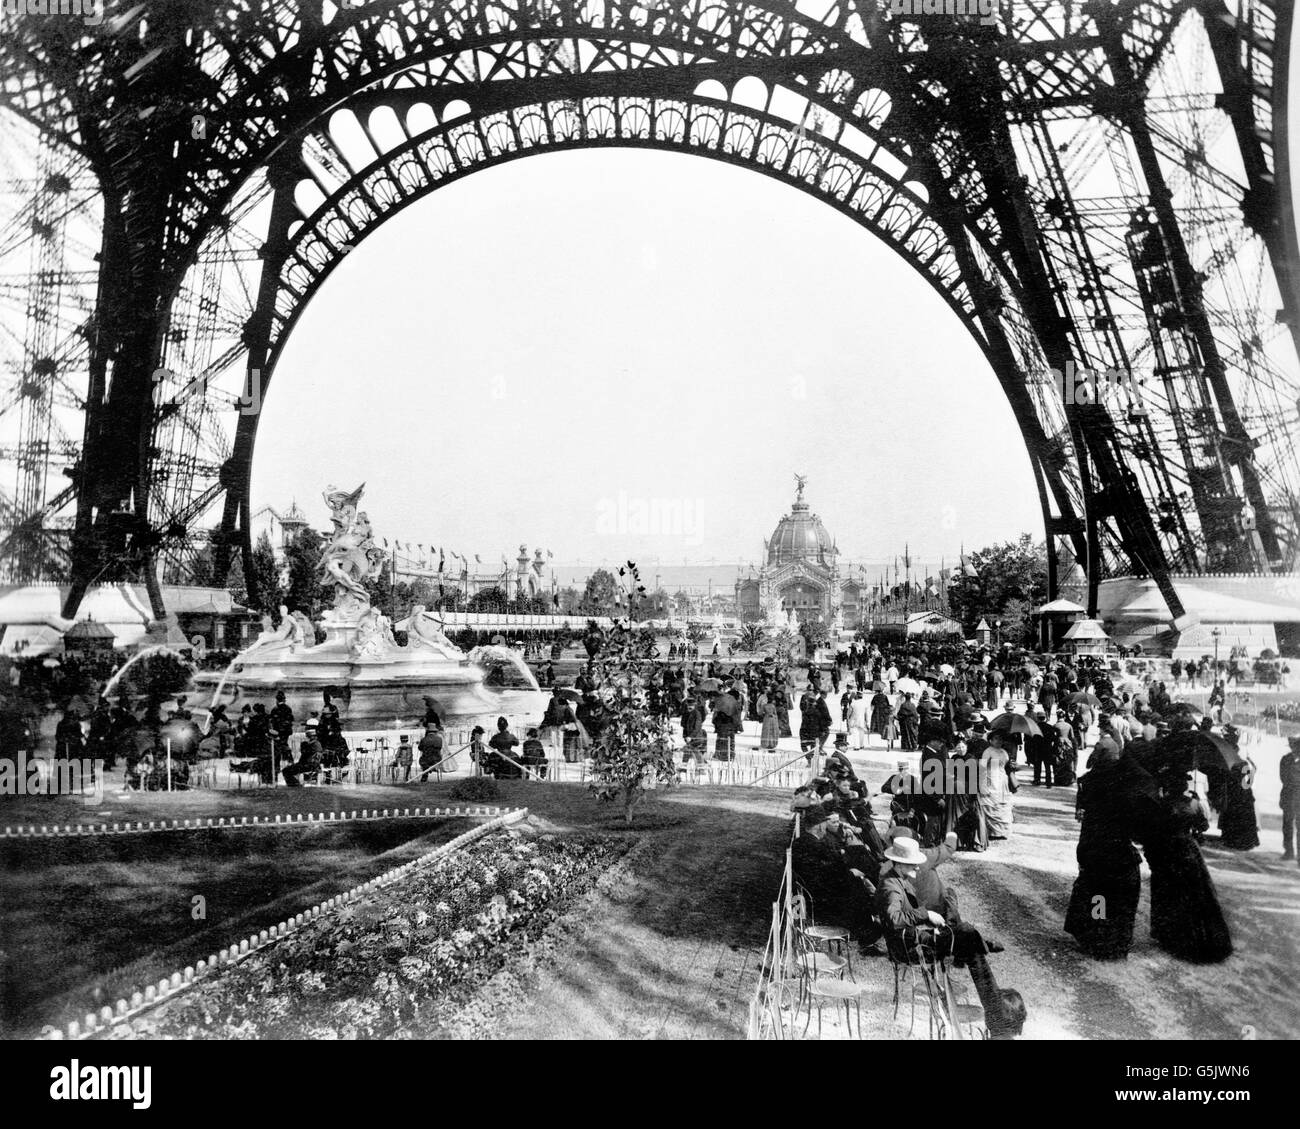 1889 PARIS EXPOSITION UNIVERSELLE LANDMARKS TOURISM FRENCH VINTAGE POSTER REPRO 